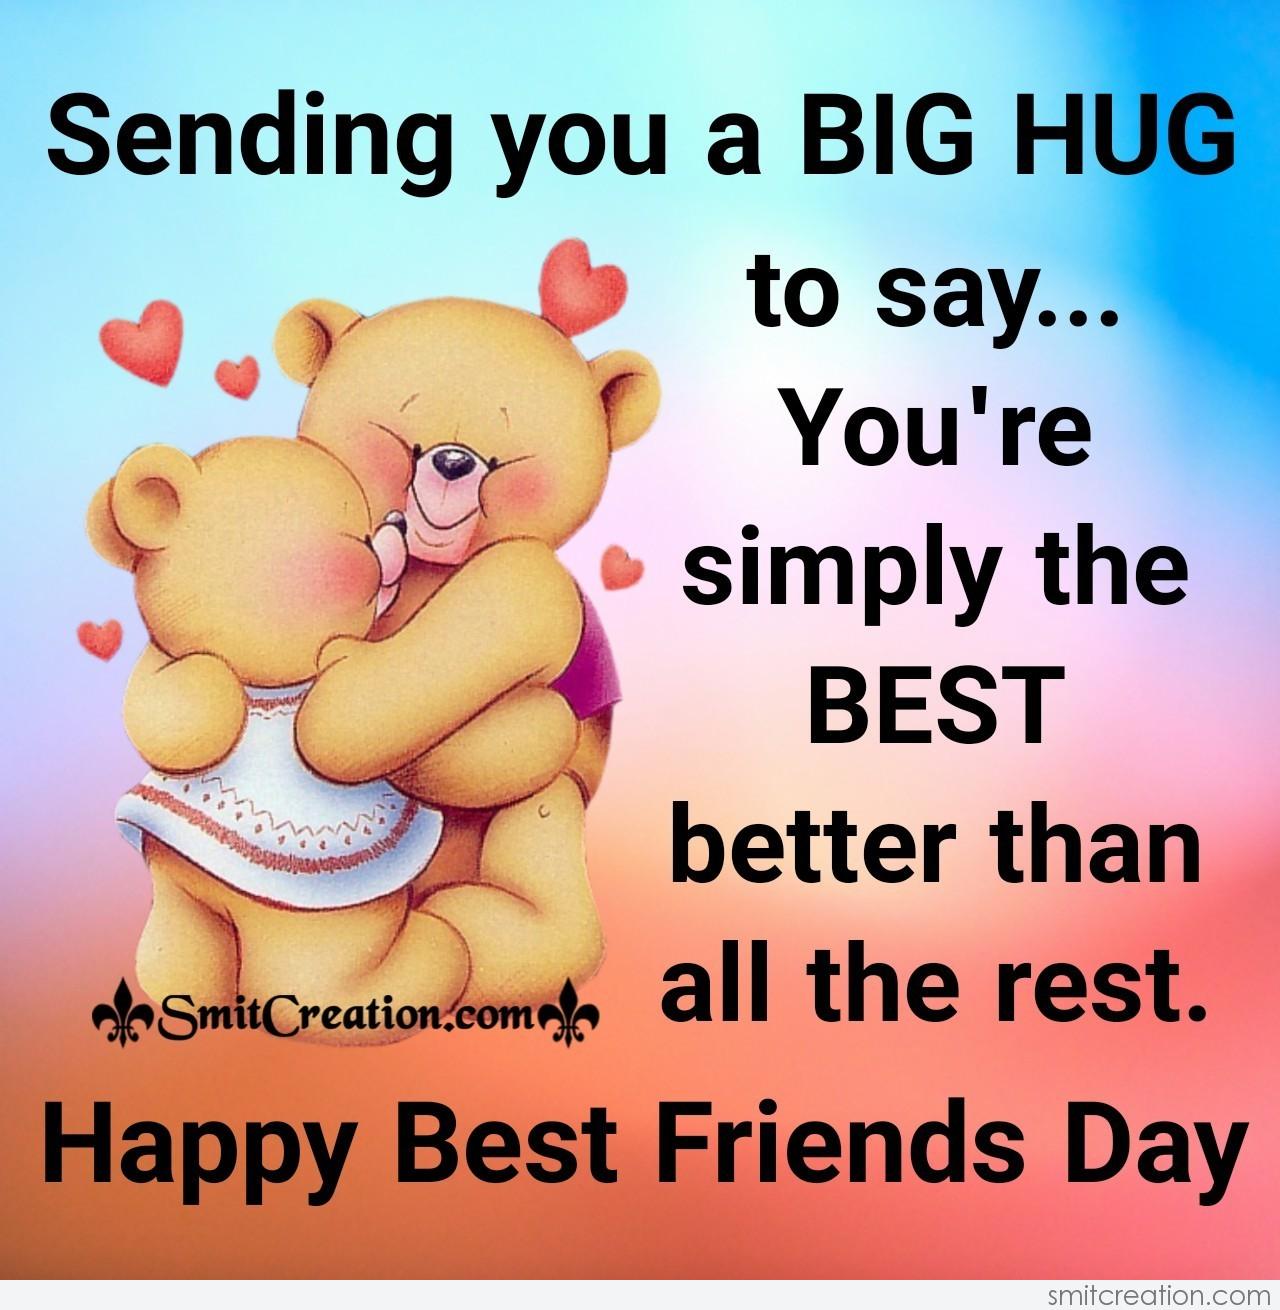 Sending Big Hugs On Best Friends Day - SmitCreation.com